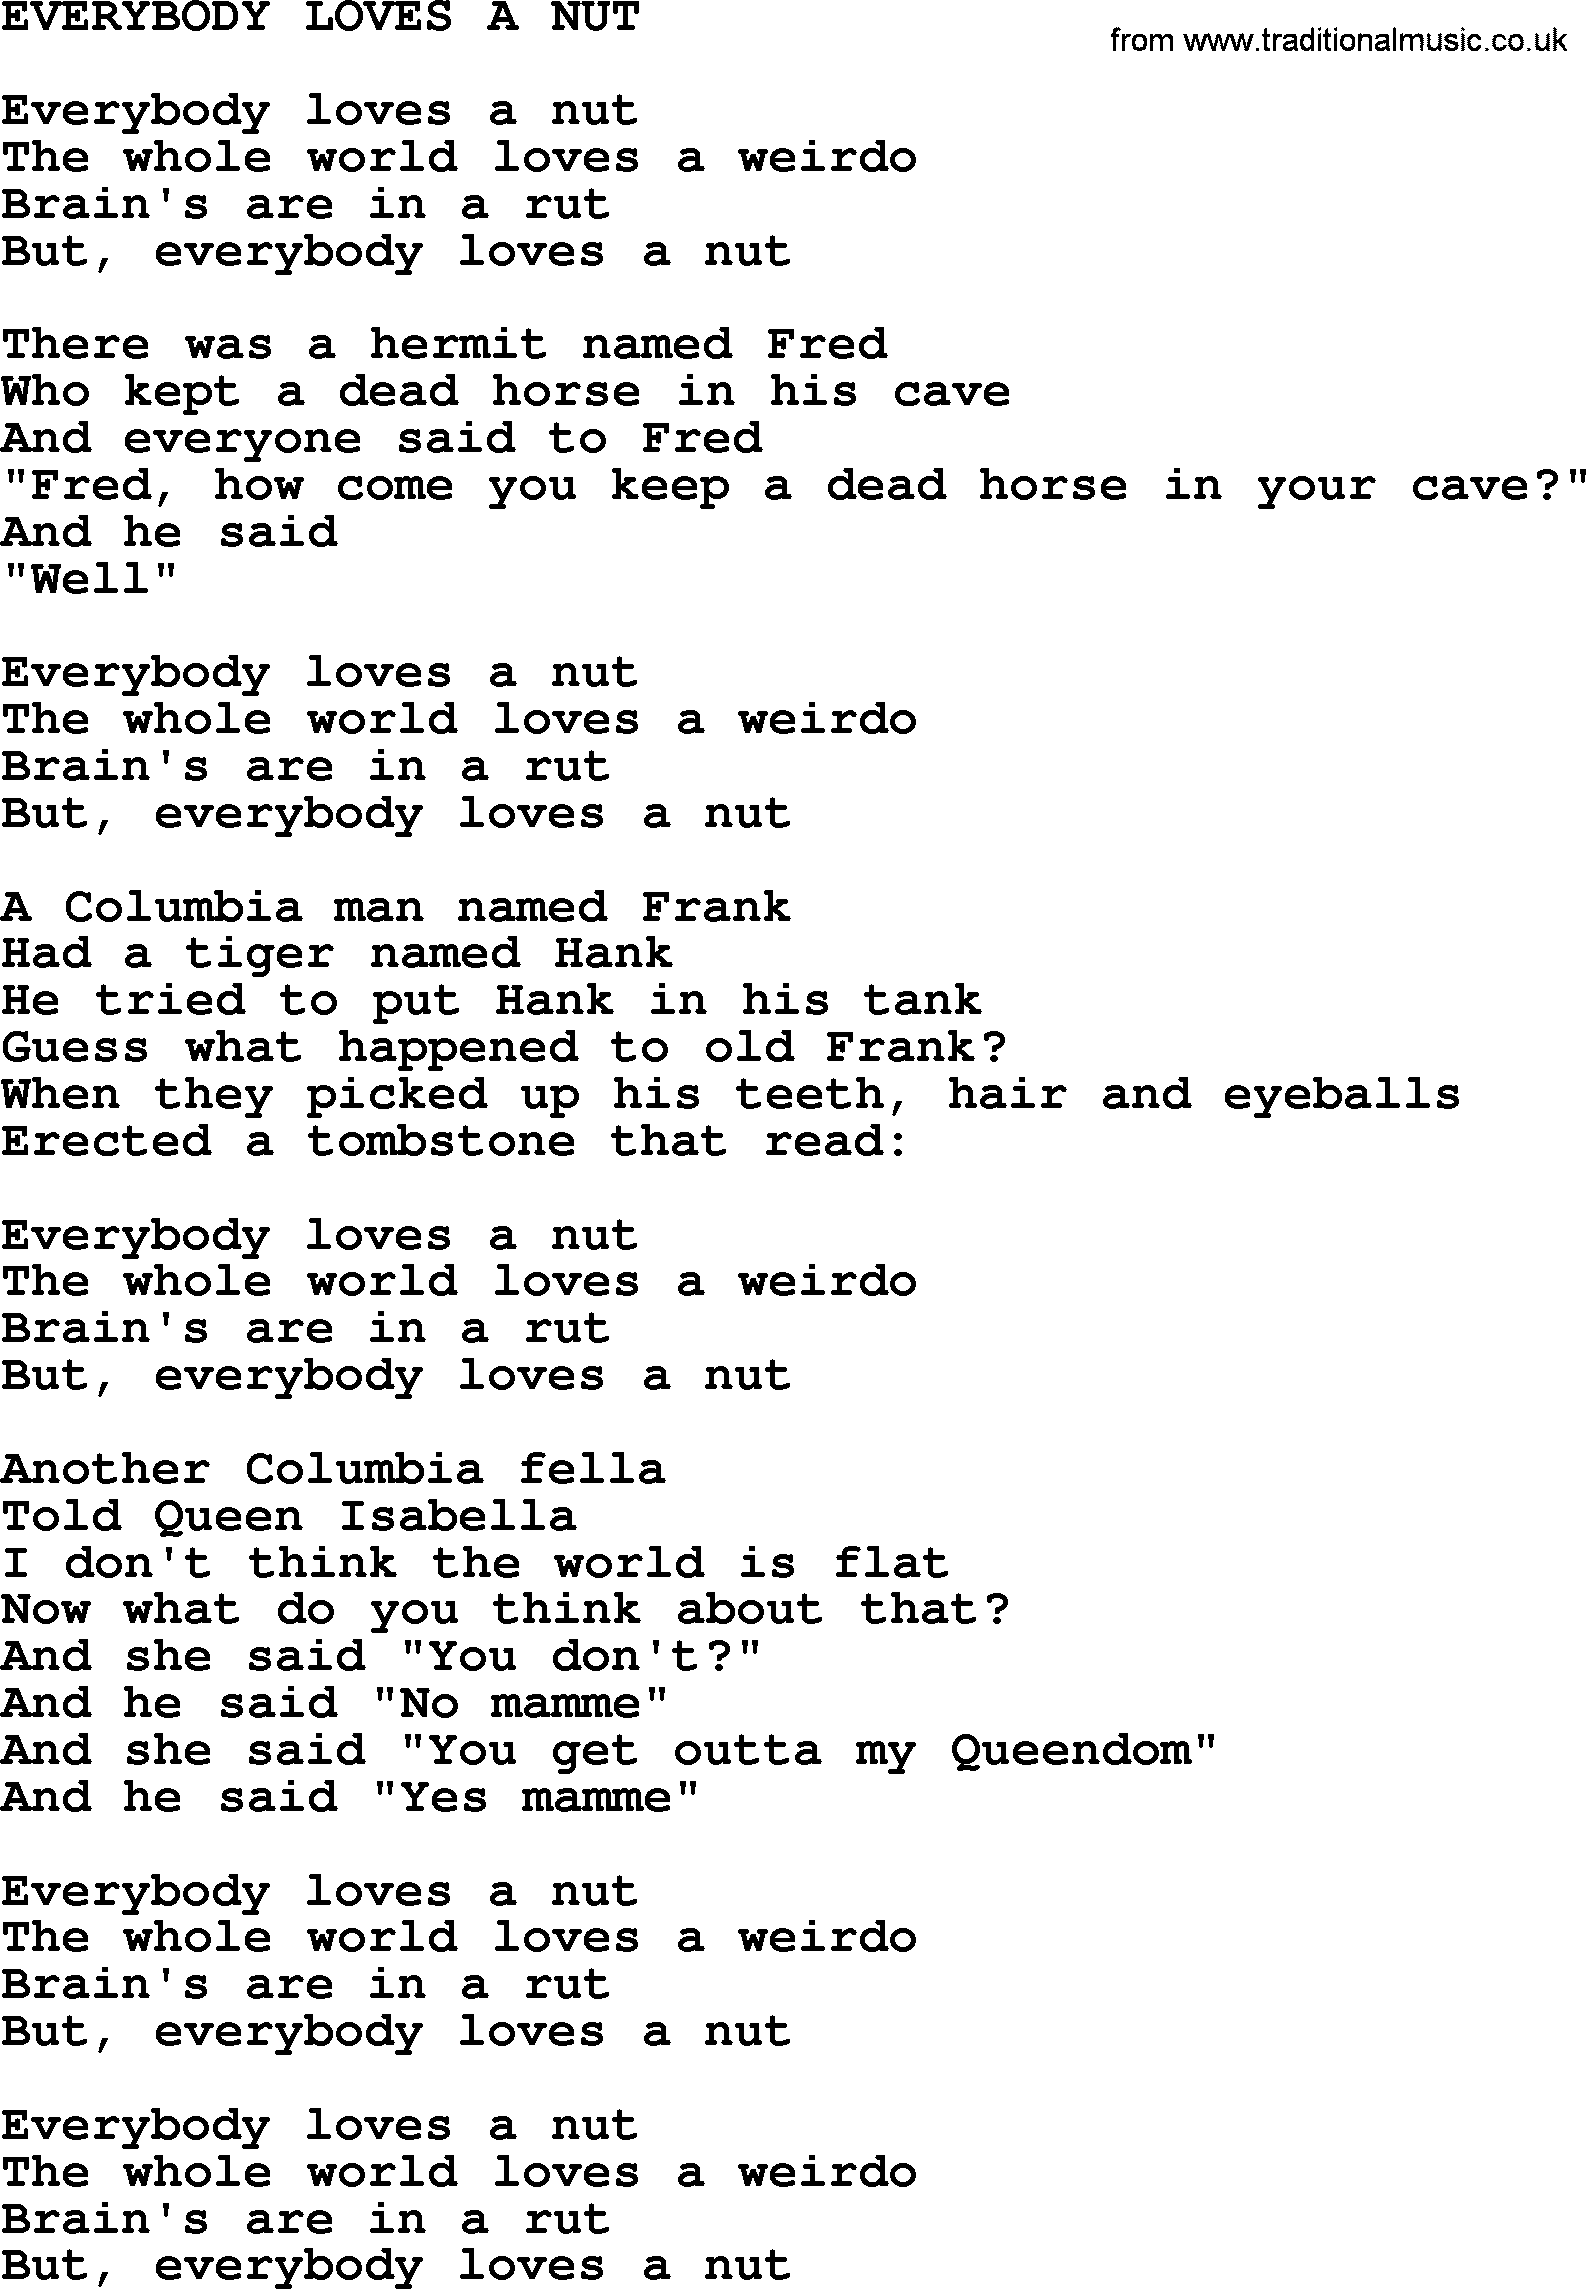 Johnny Cash song Everybody Loves A Nut.txt lyrics